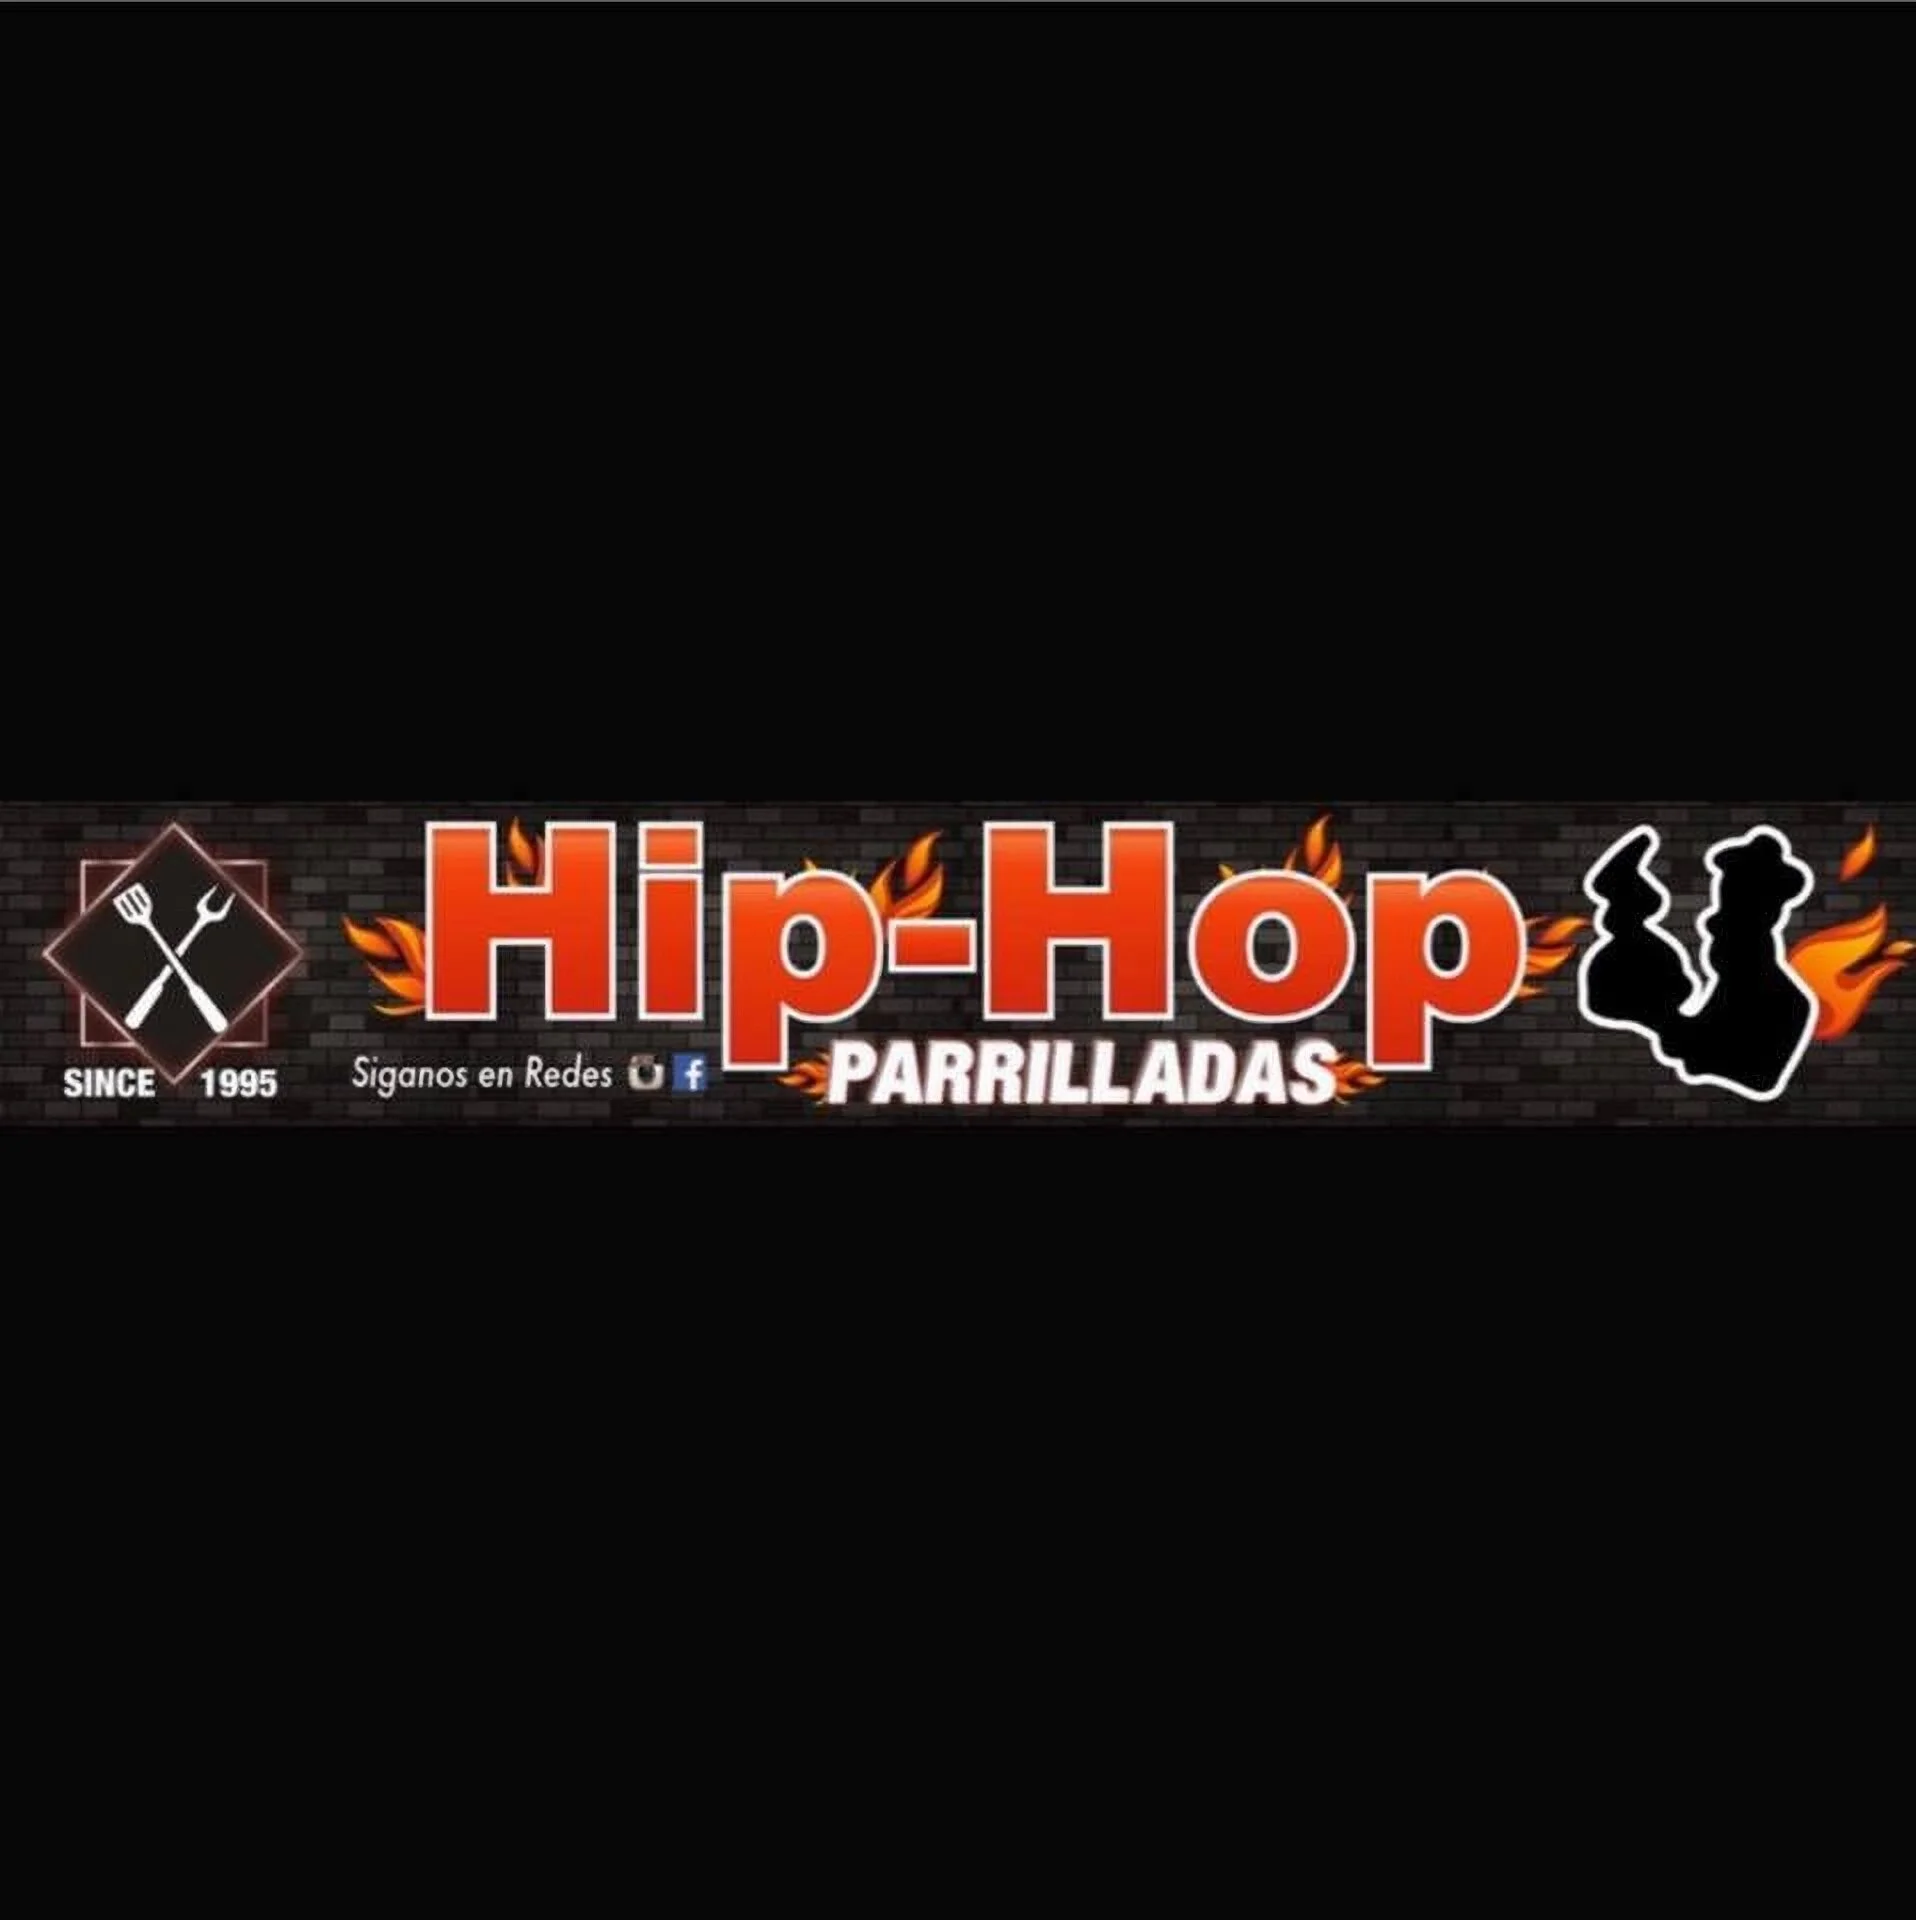 Restaurantes-parrilladas-hip-hop-20151